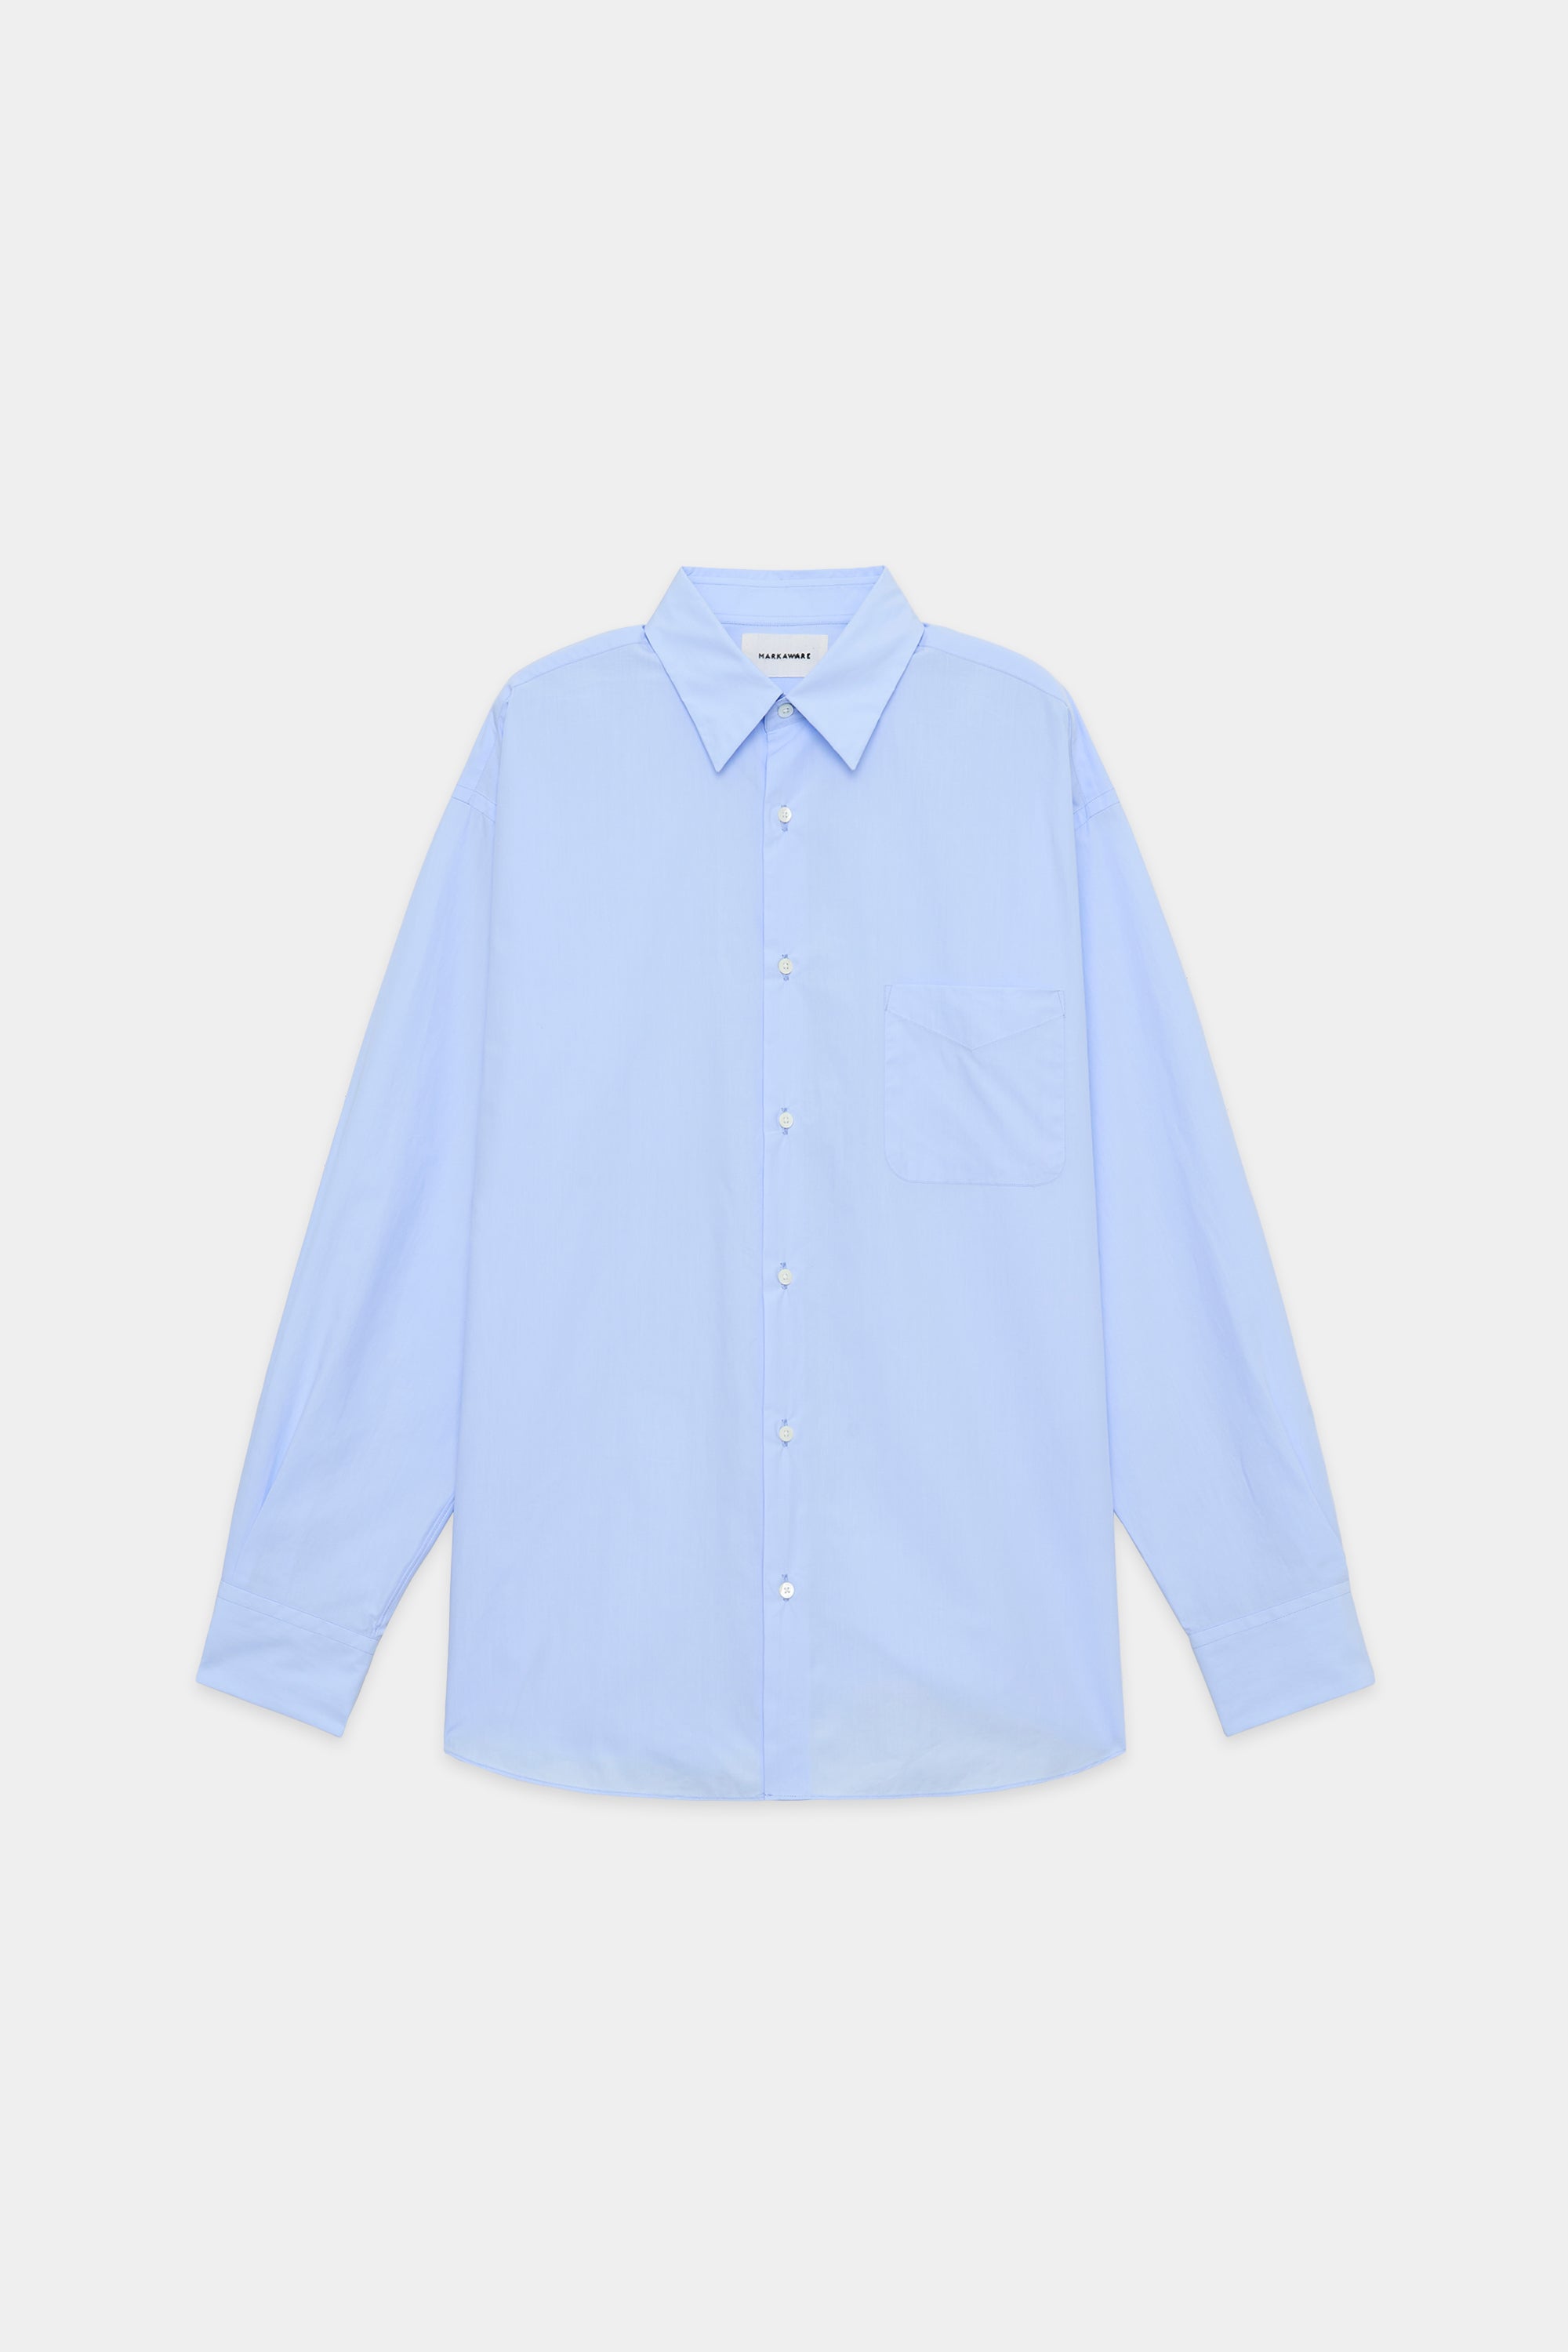 MARKAWARE コンフォートフィットシャツ, Saxe Blue袖丈長袖